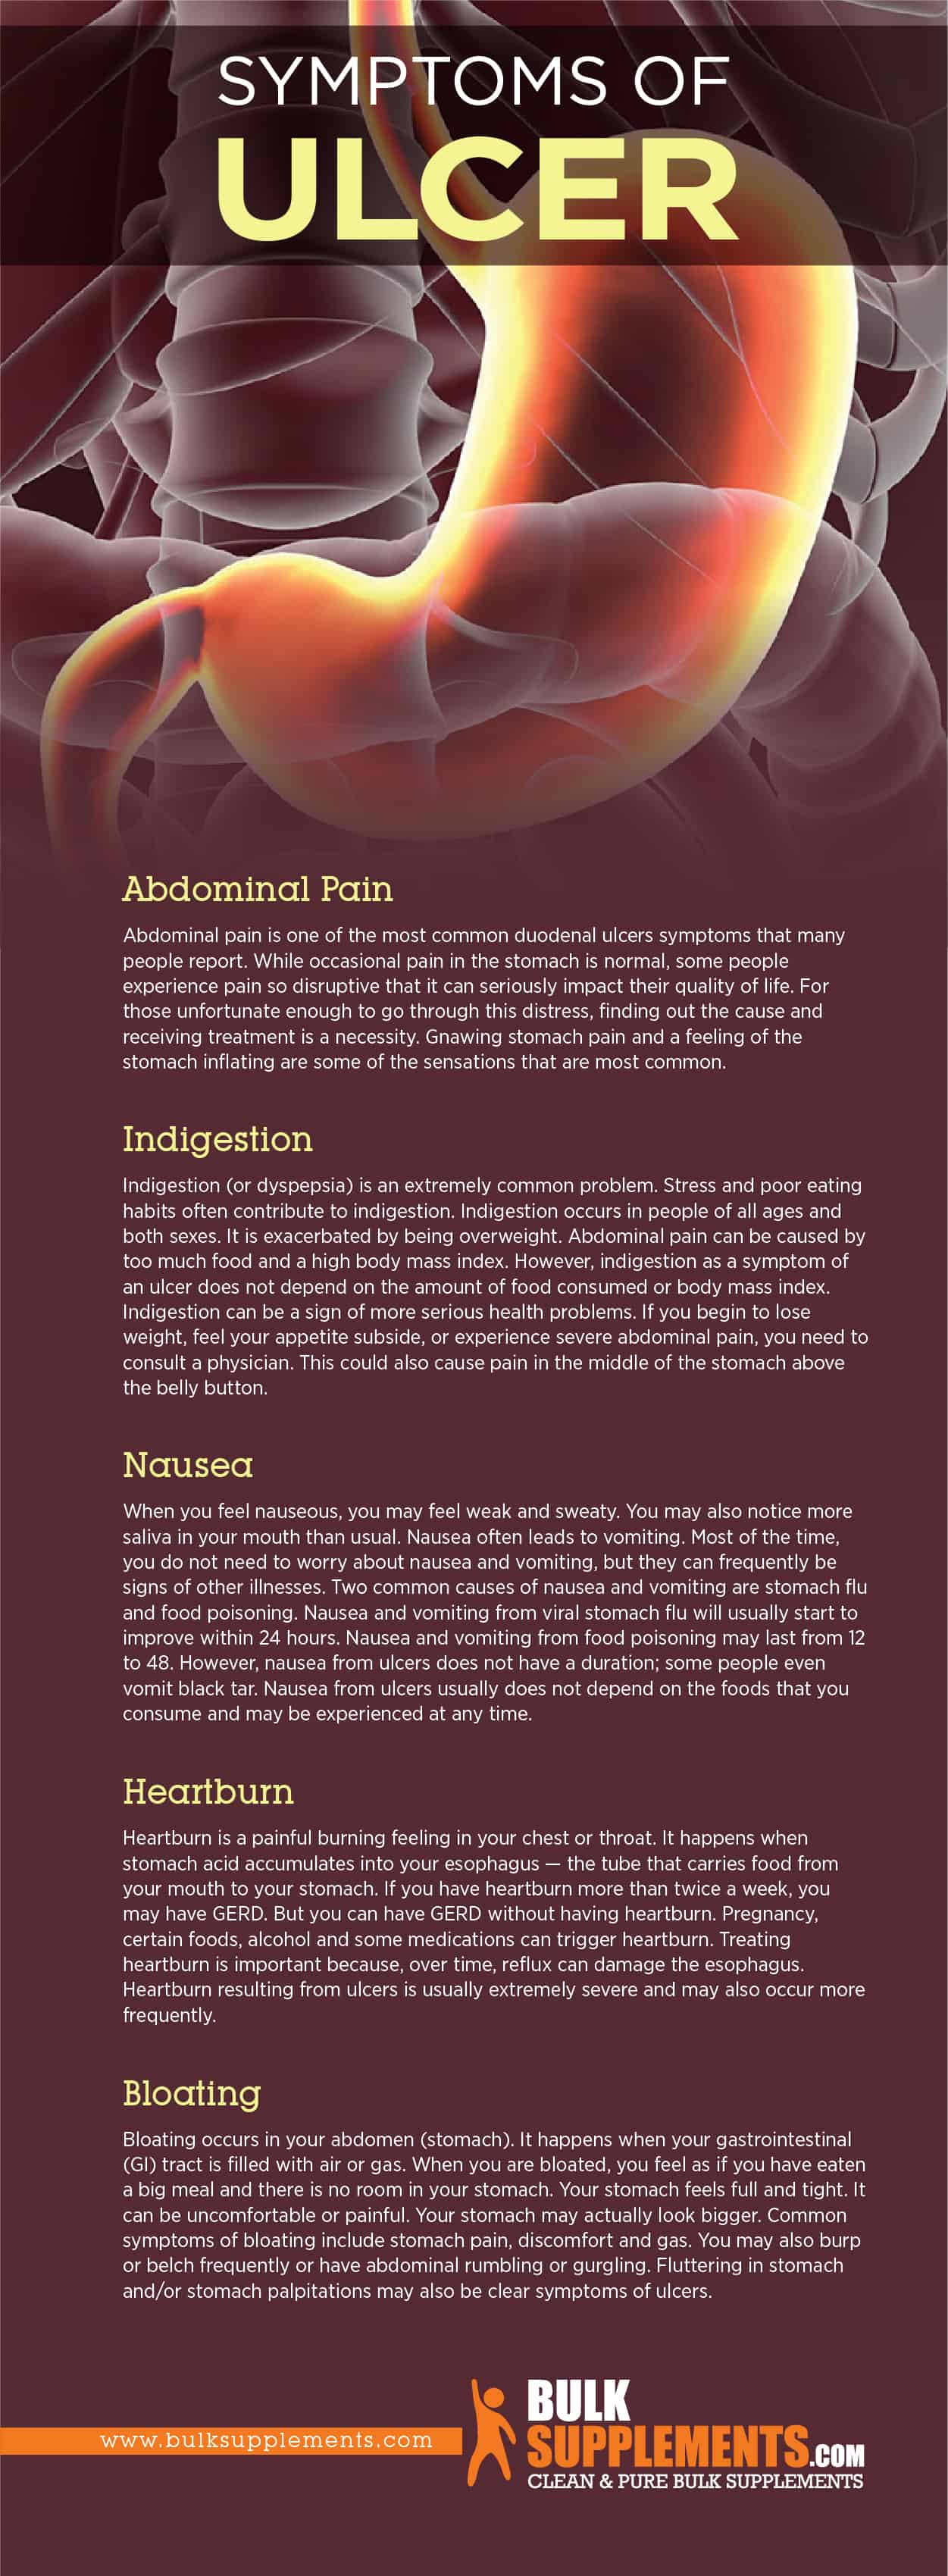 Symptoms of Ulcer